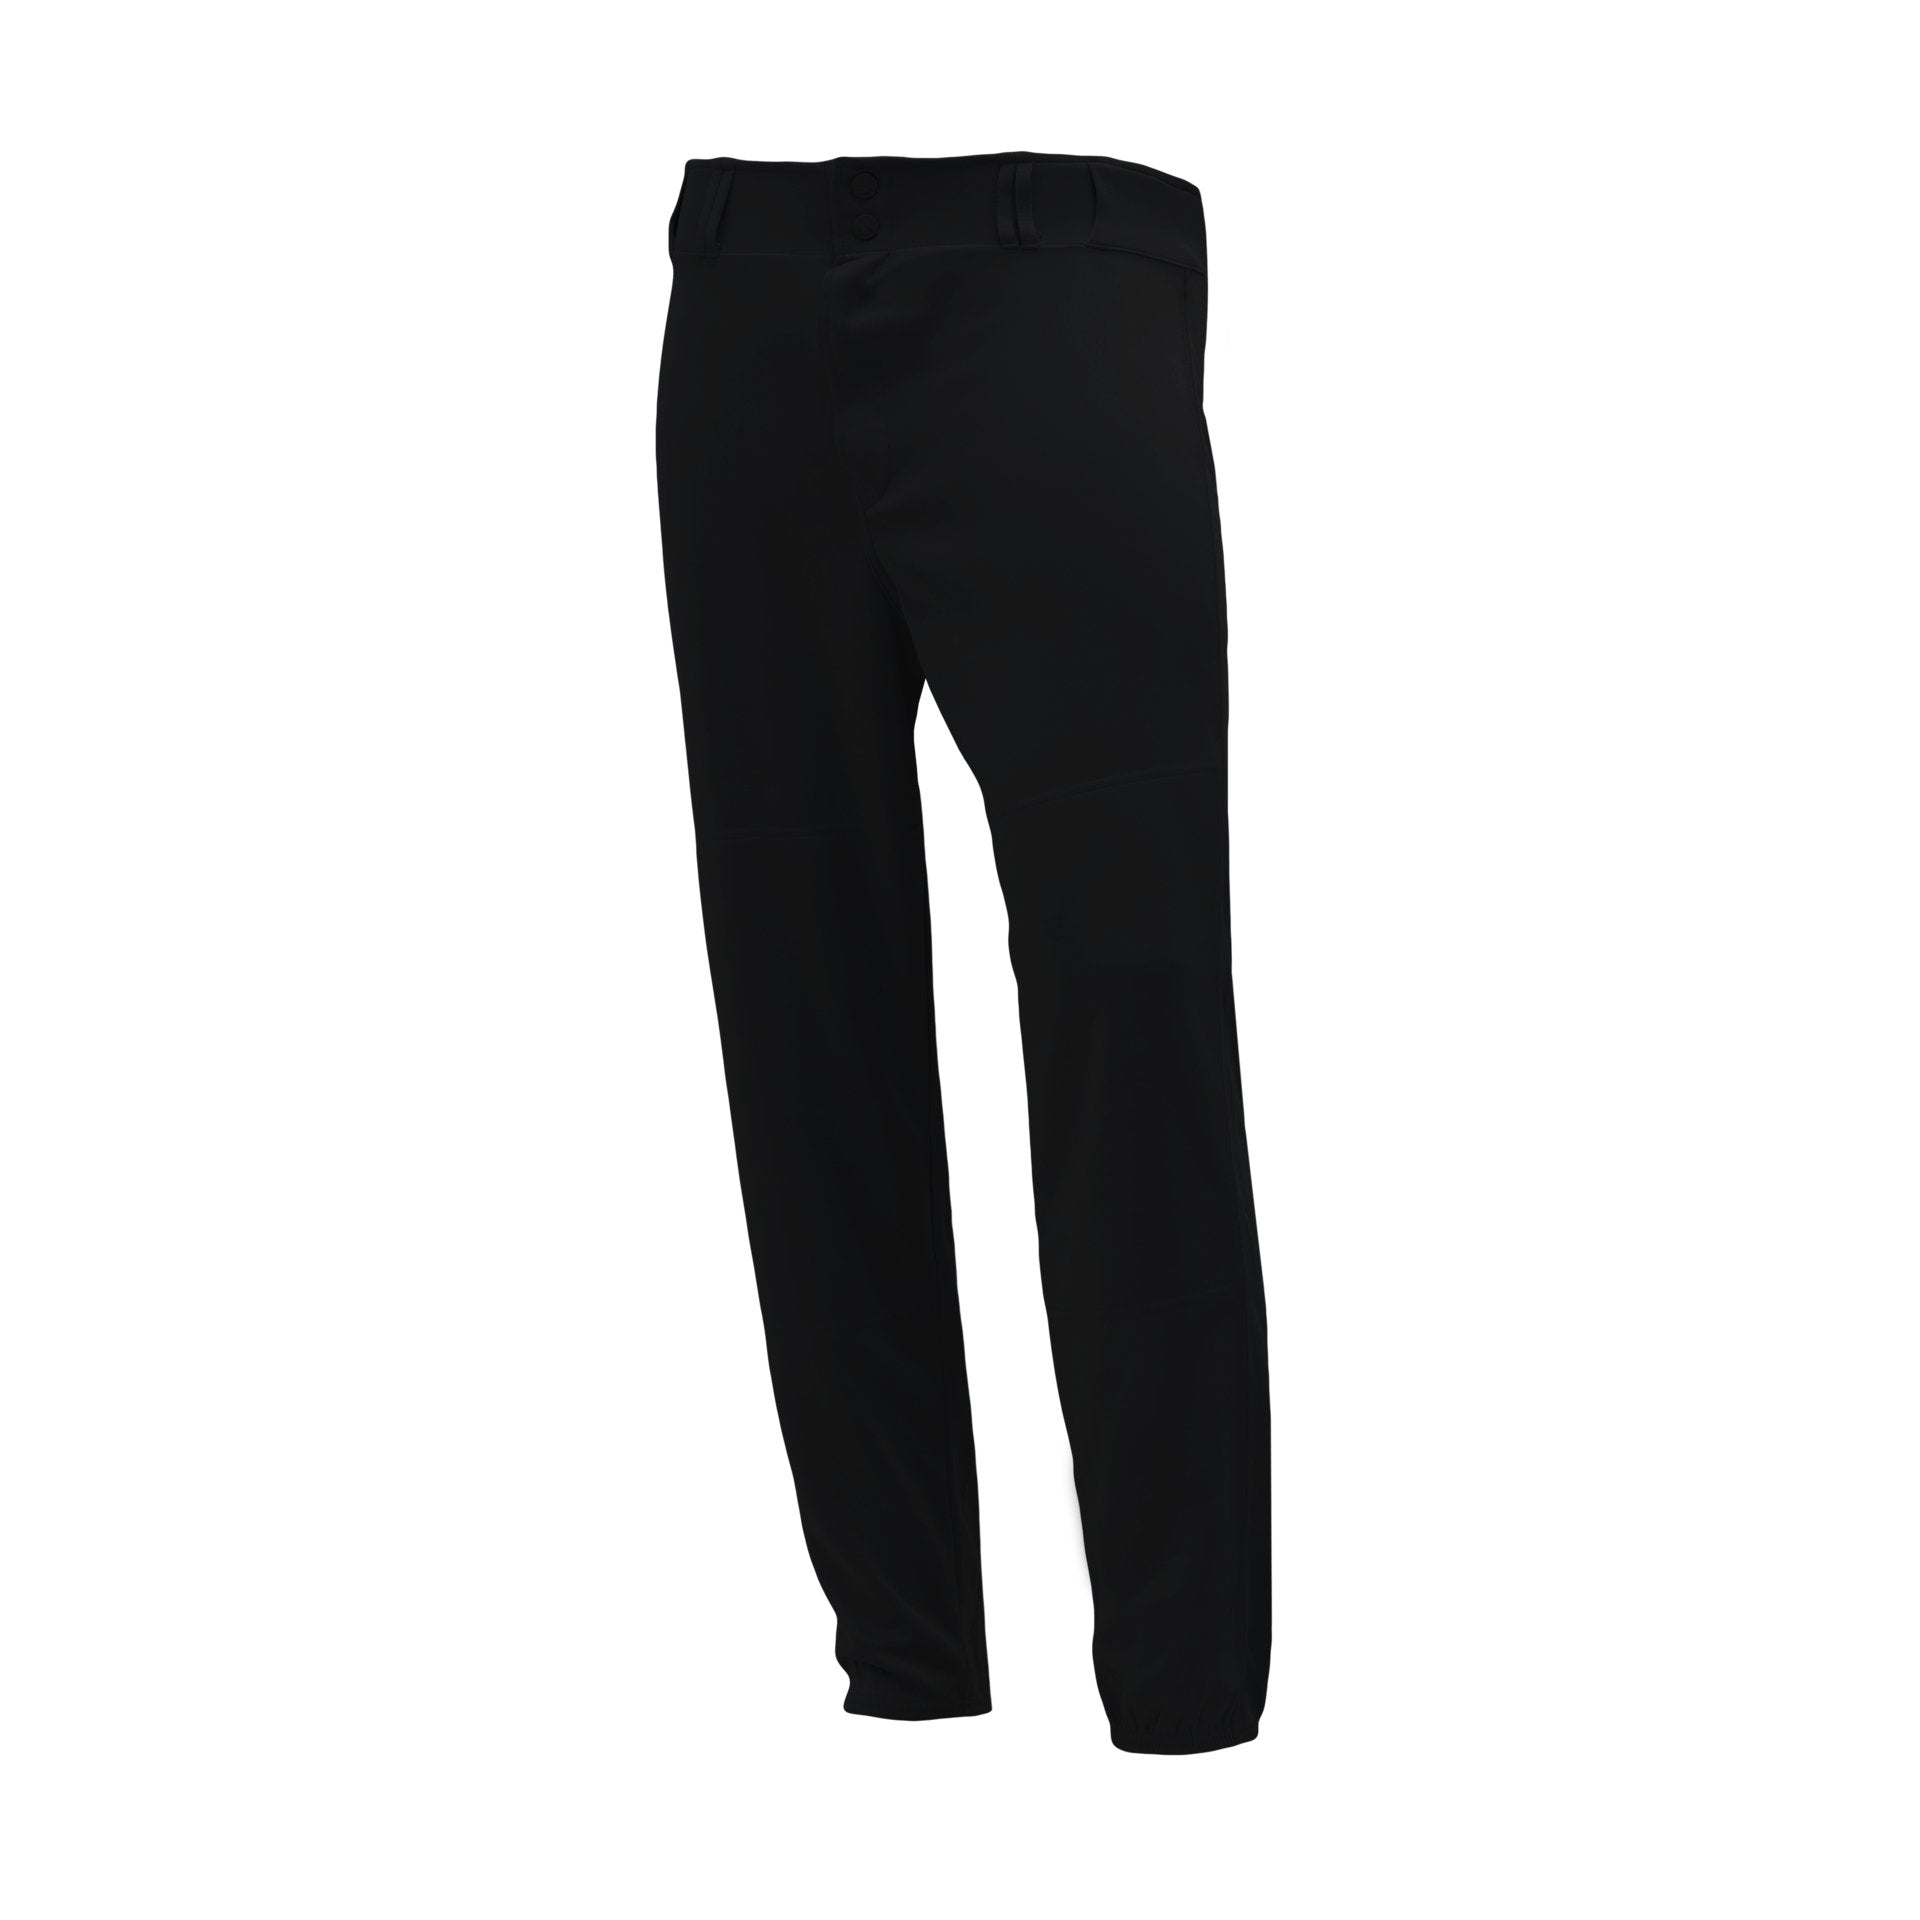 Premium Baseball Pants, Elastic Bottom, Black, ba1380-001